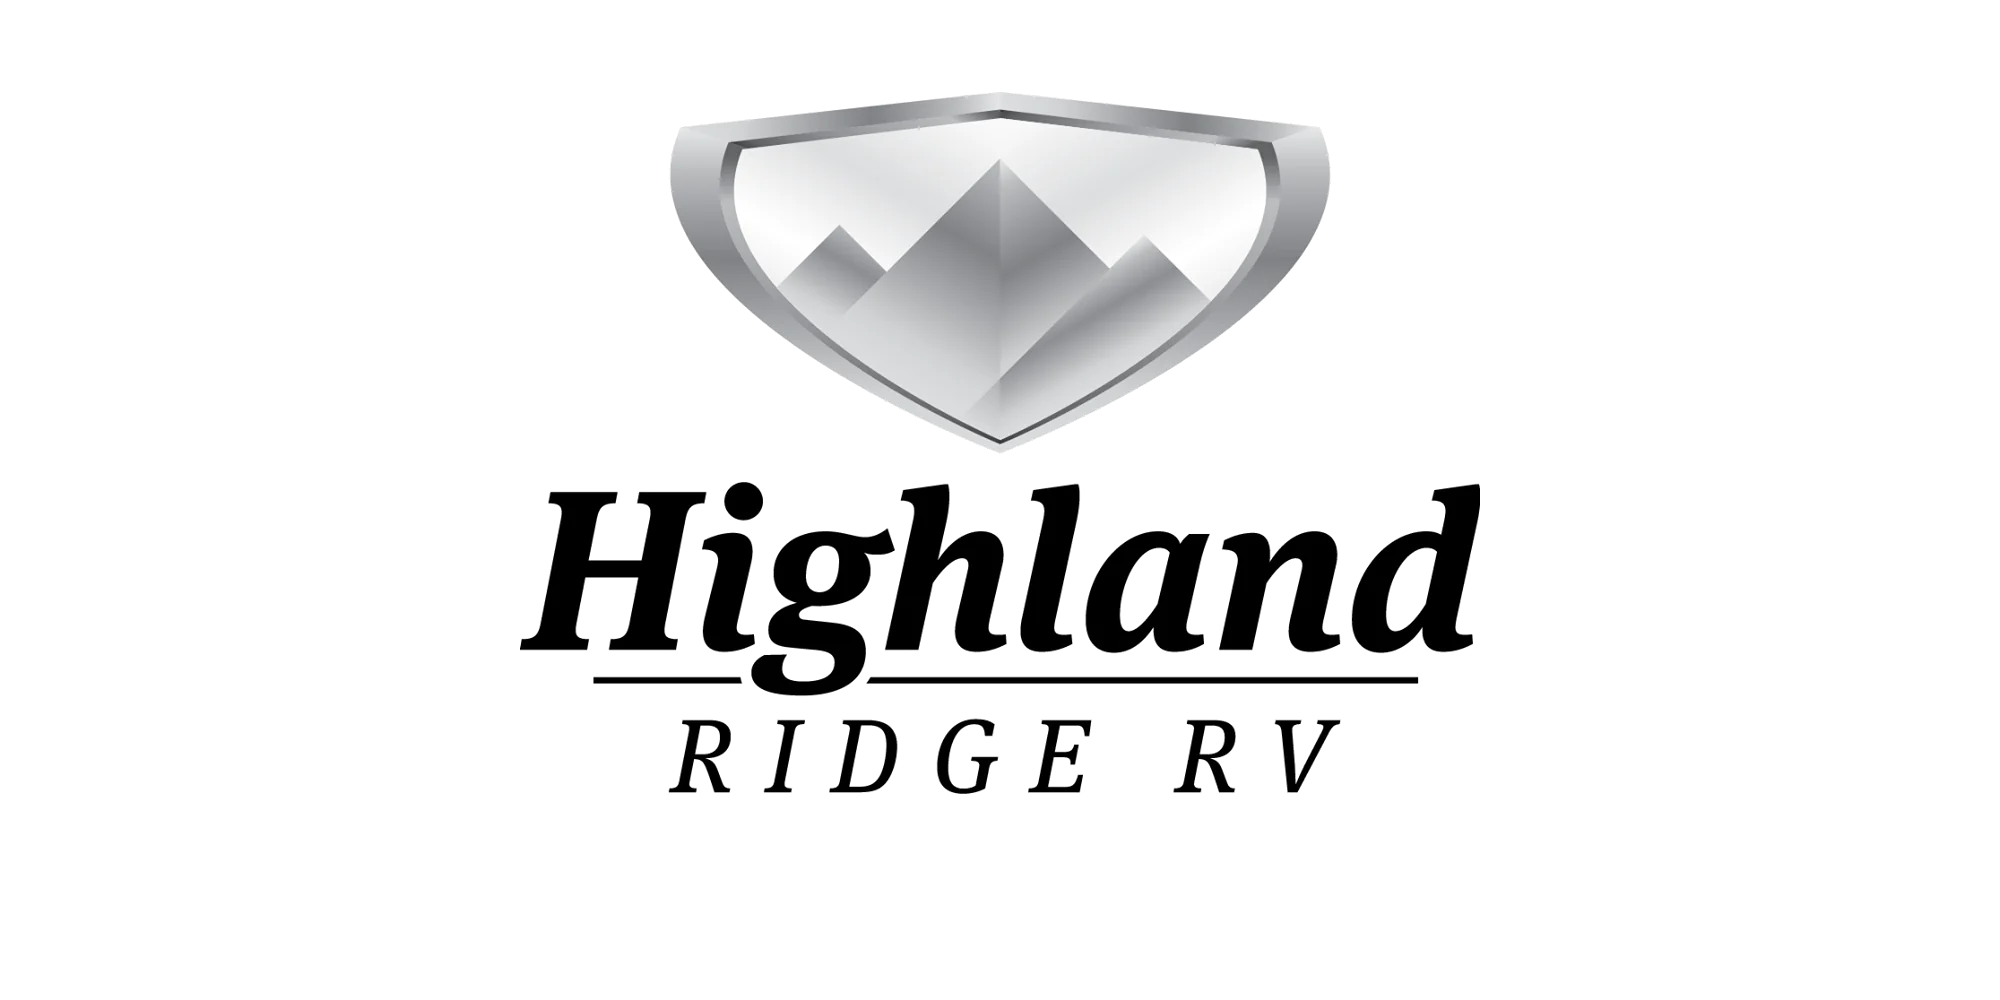 Highland Ridge